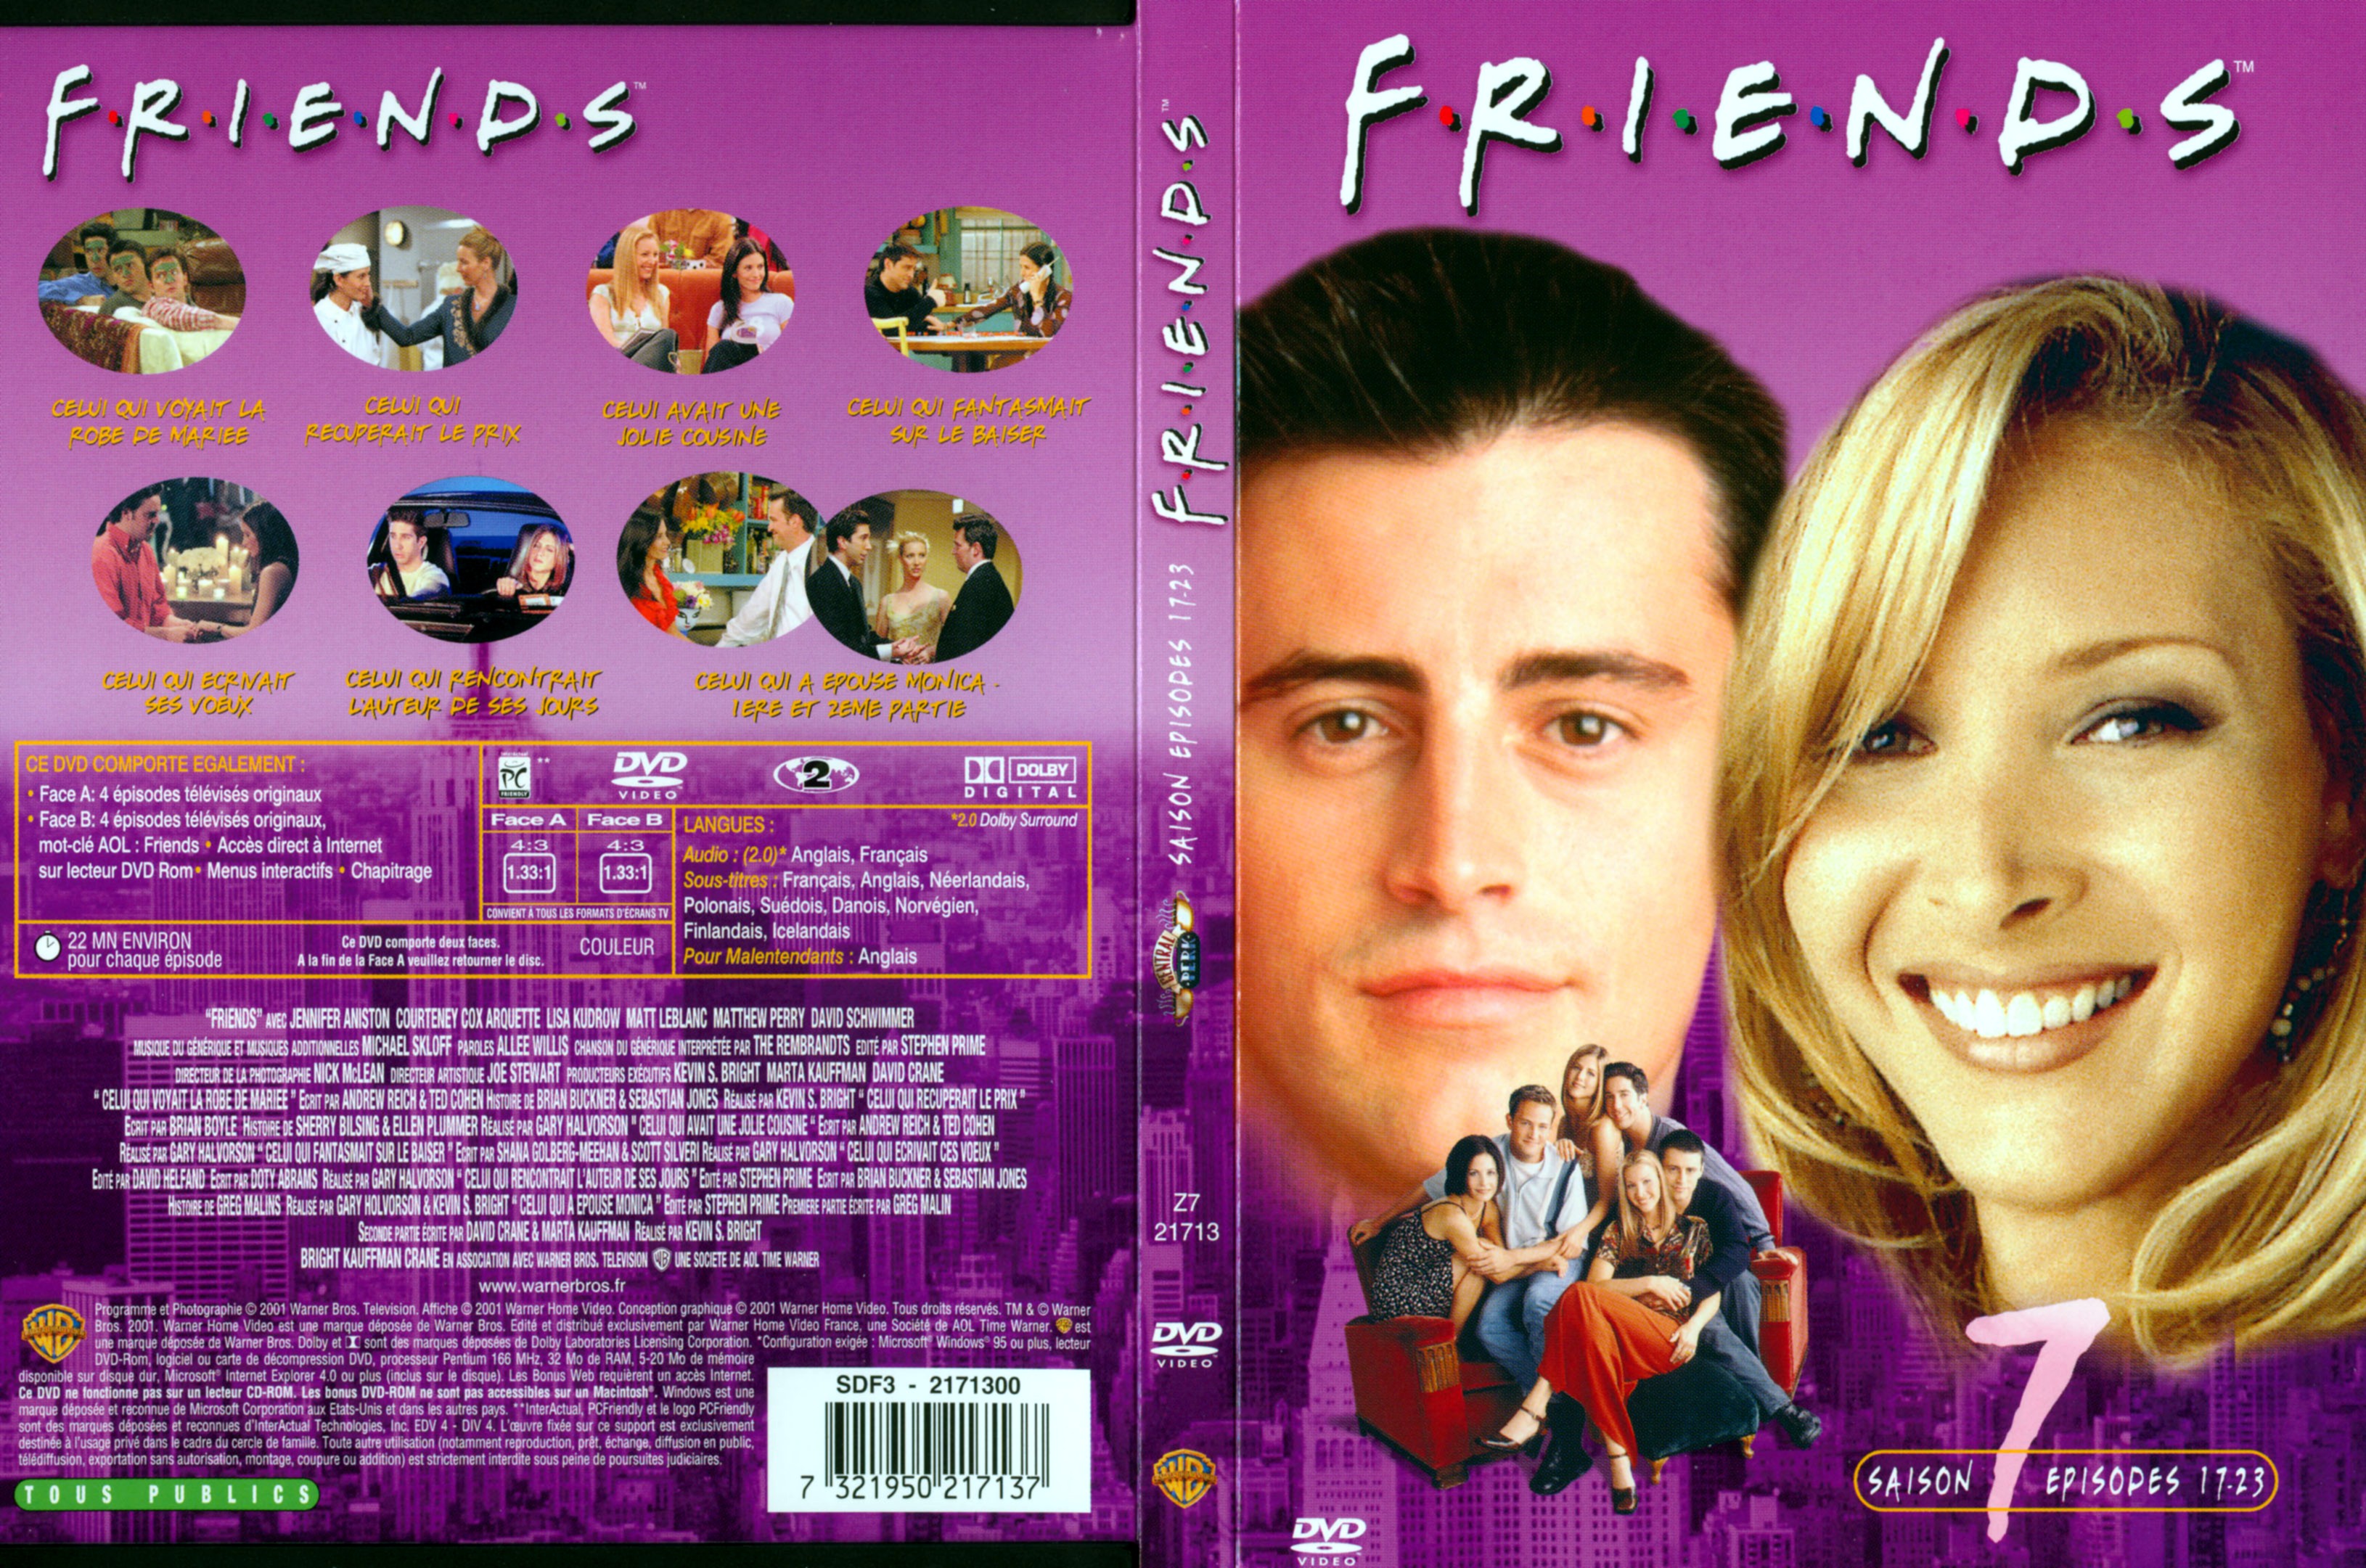 Jaquette DVD Friends saison 7 dvd 3